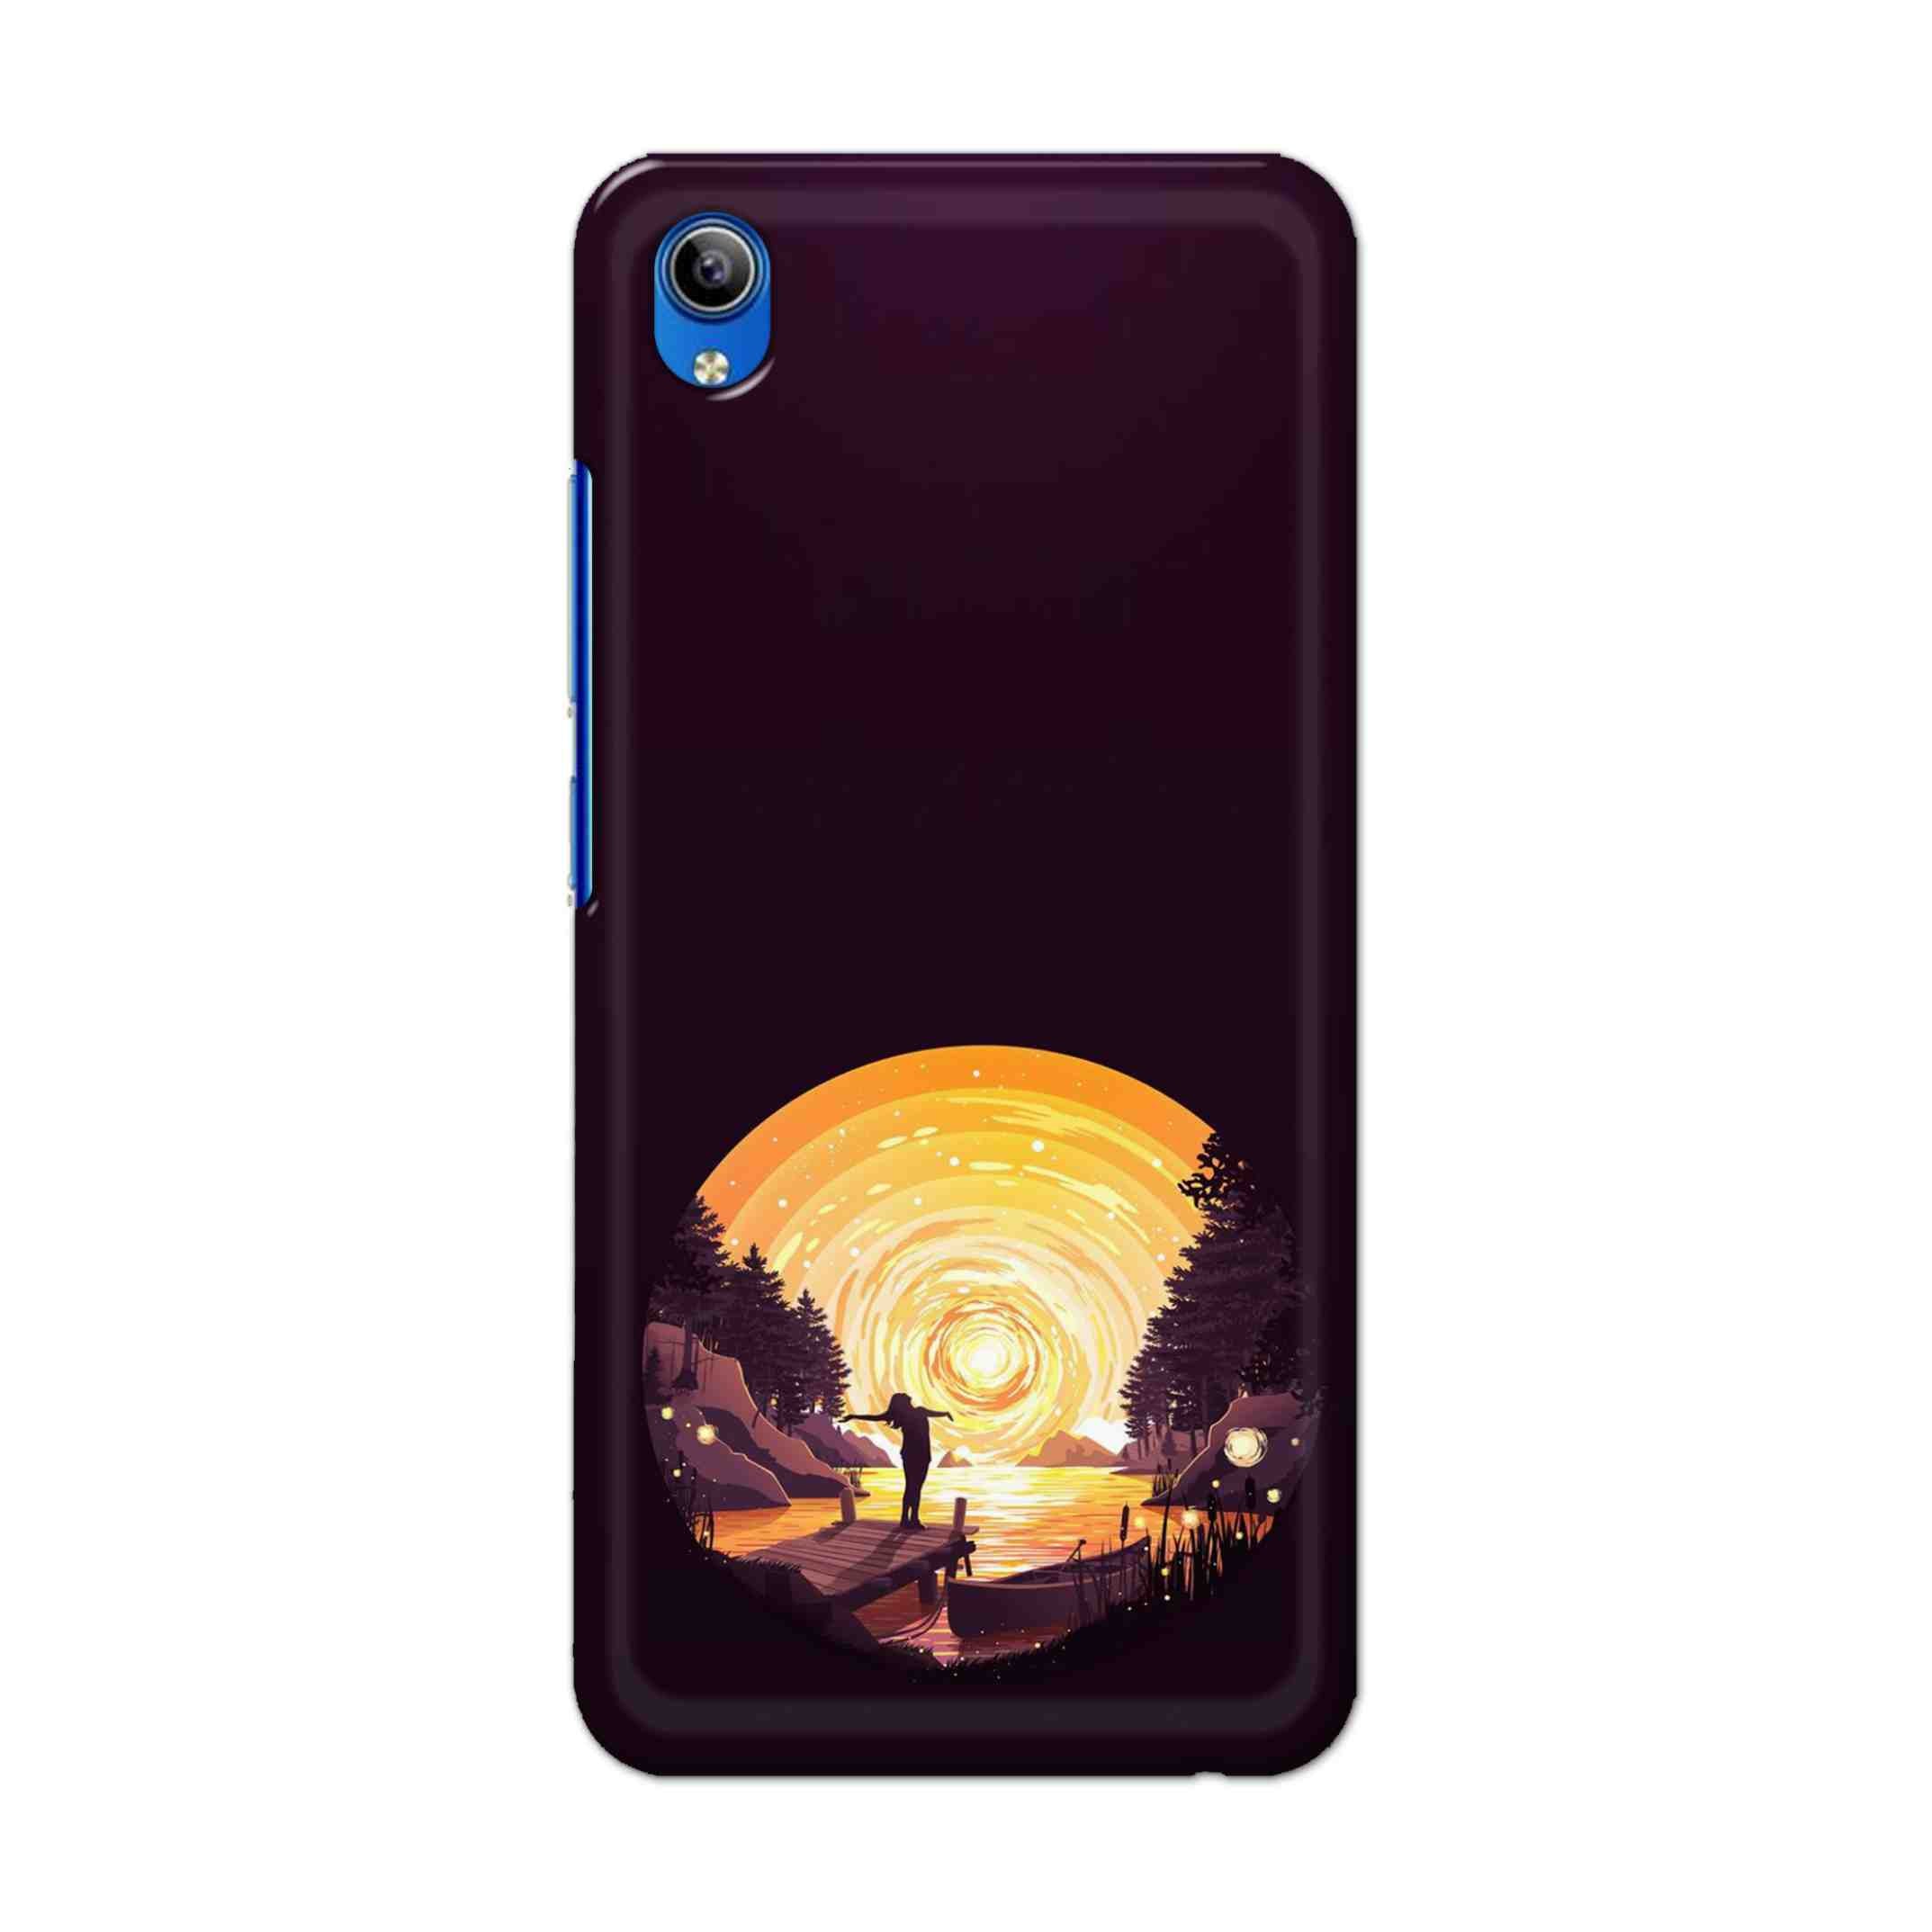 Buy Night Sunrise Hard Back Mobile Phone Case Cover For Vivo Y91i Online